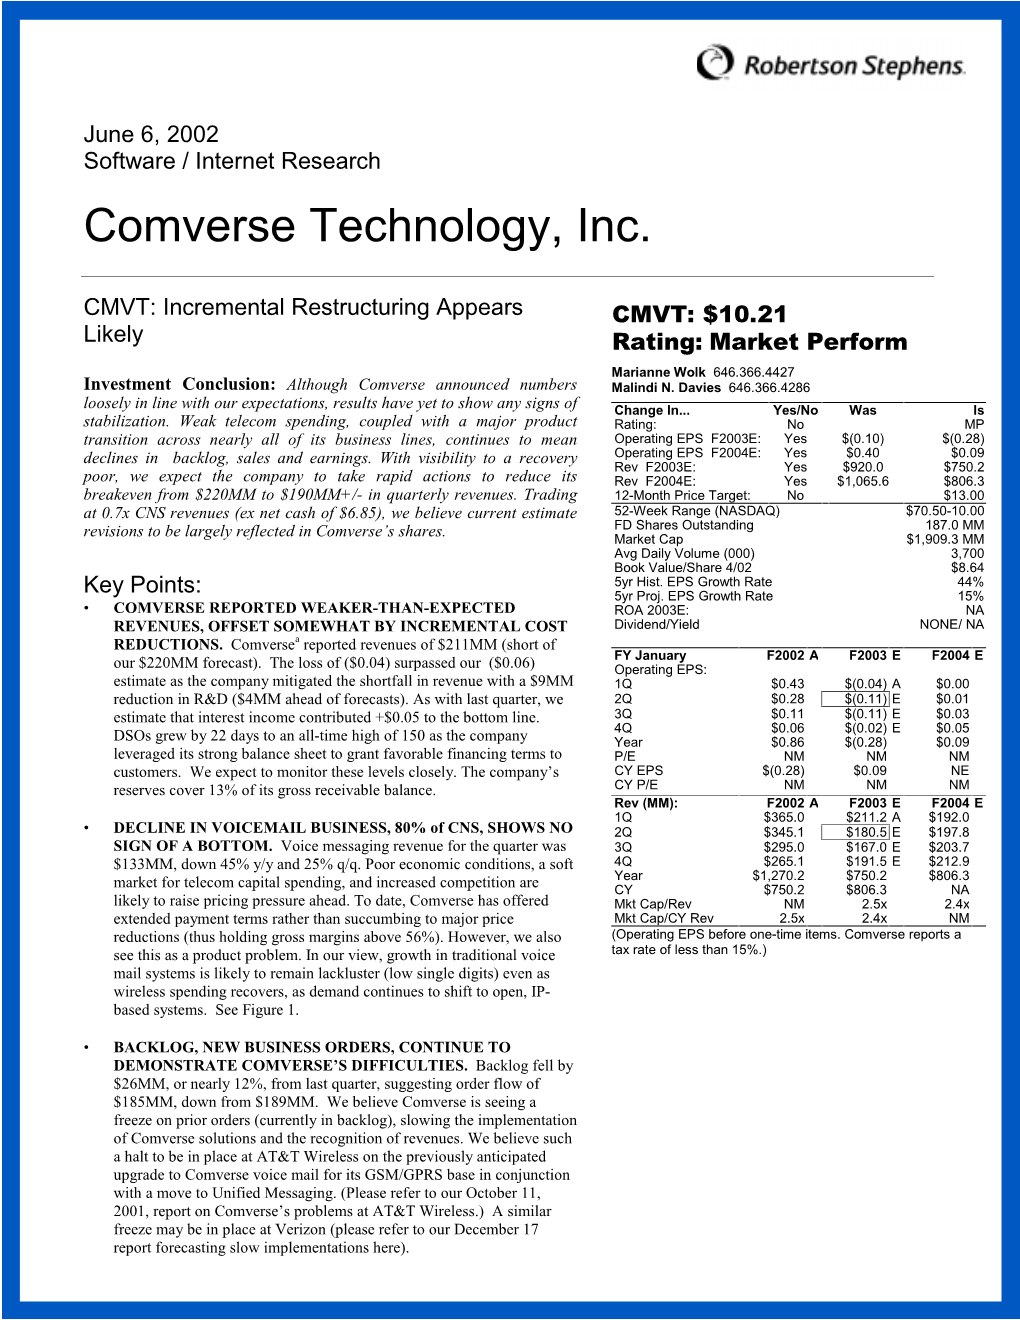 Comverse Technology, Inc